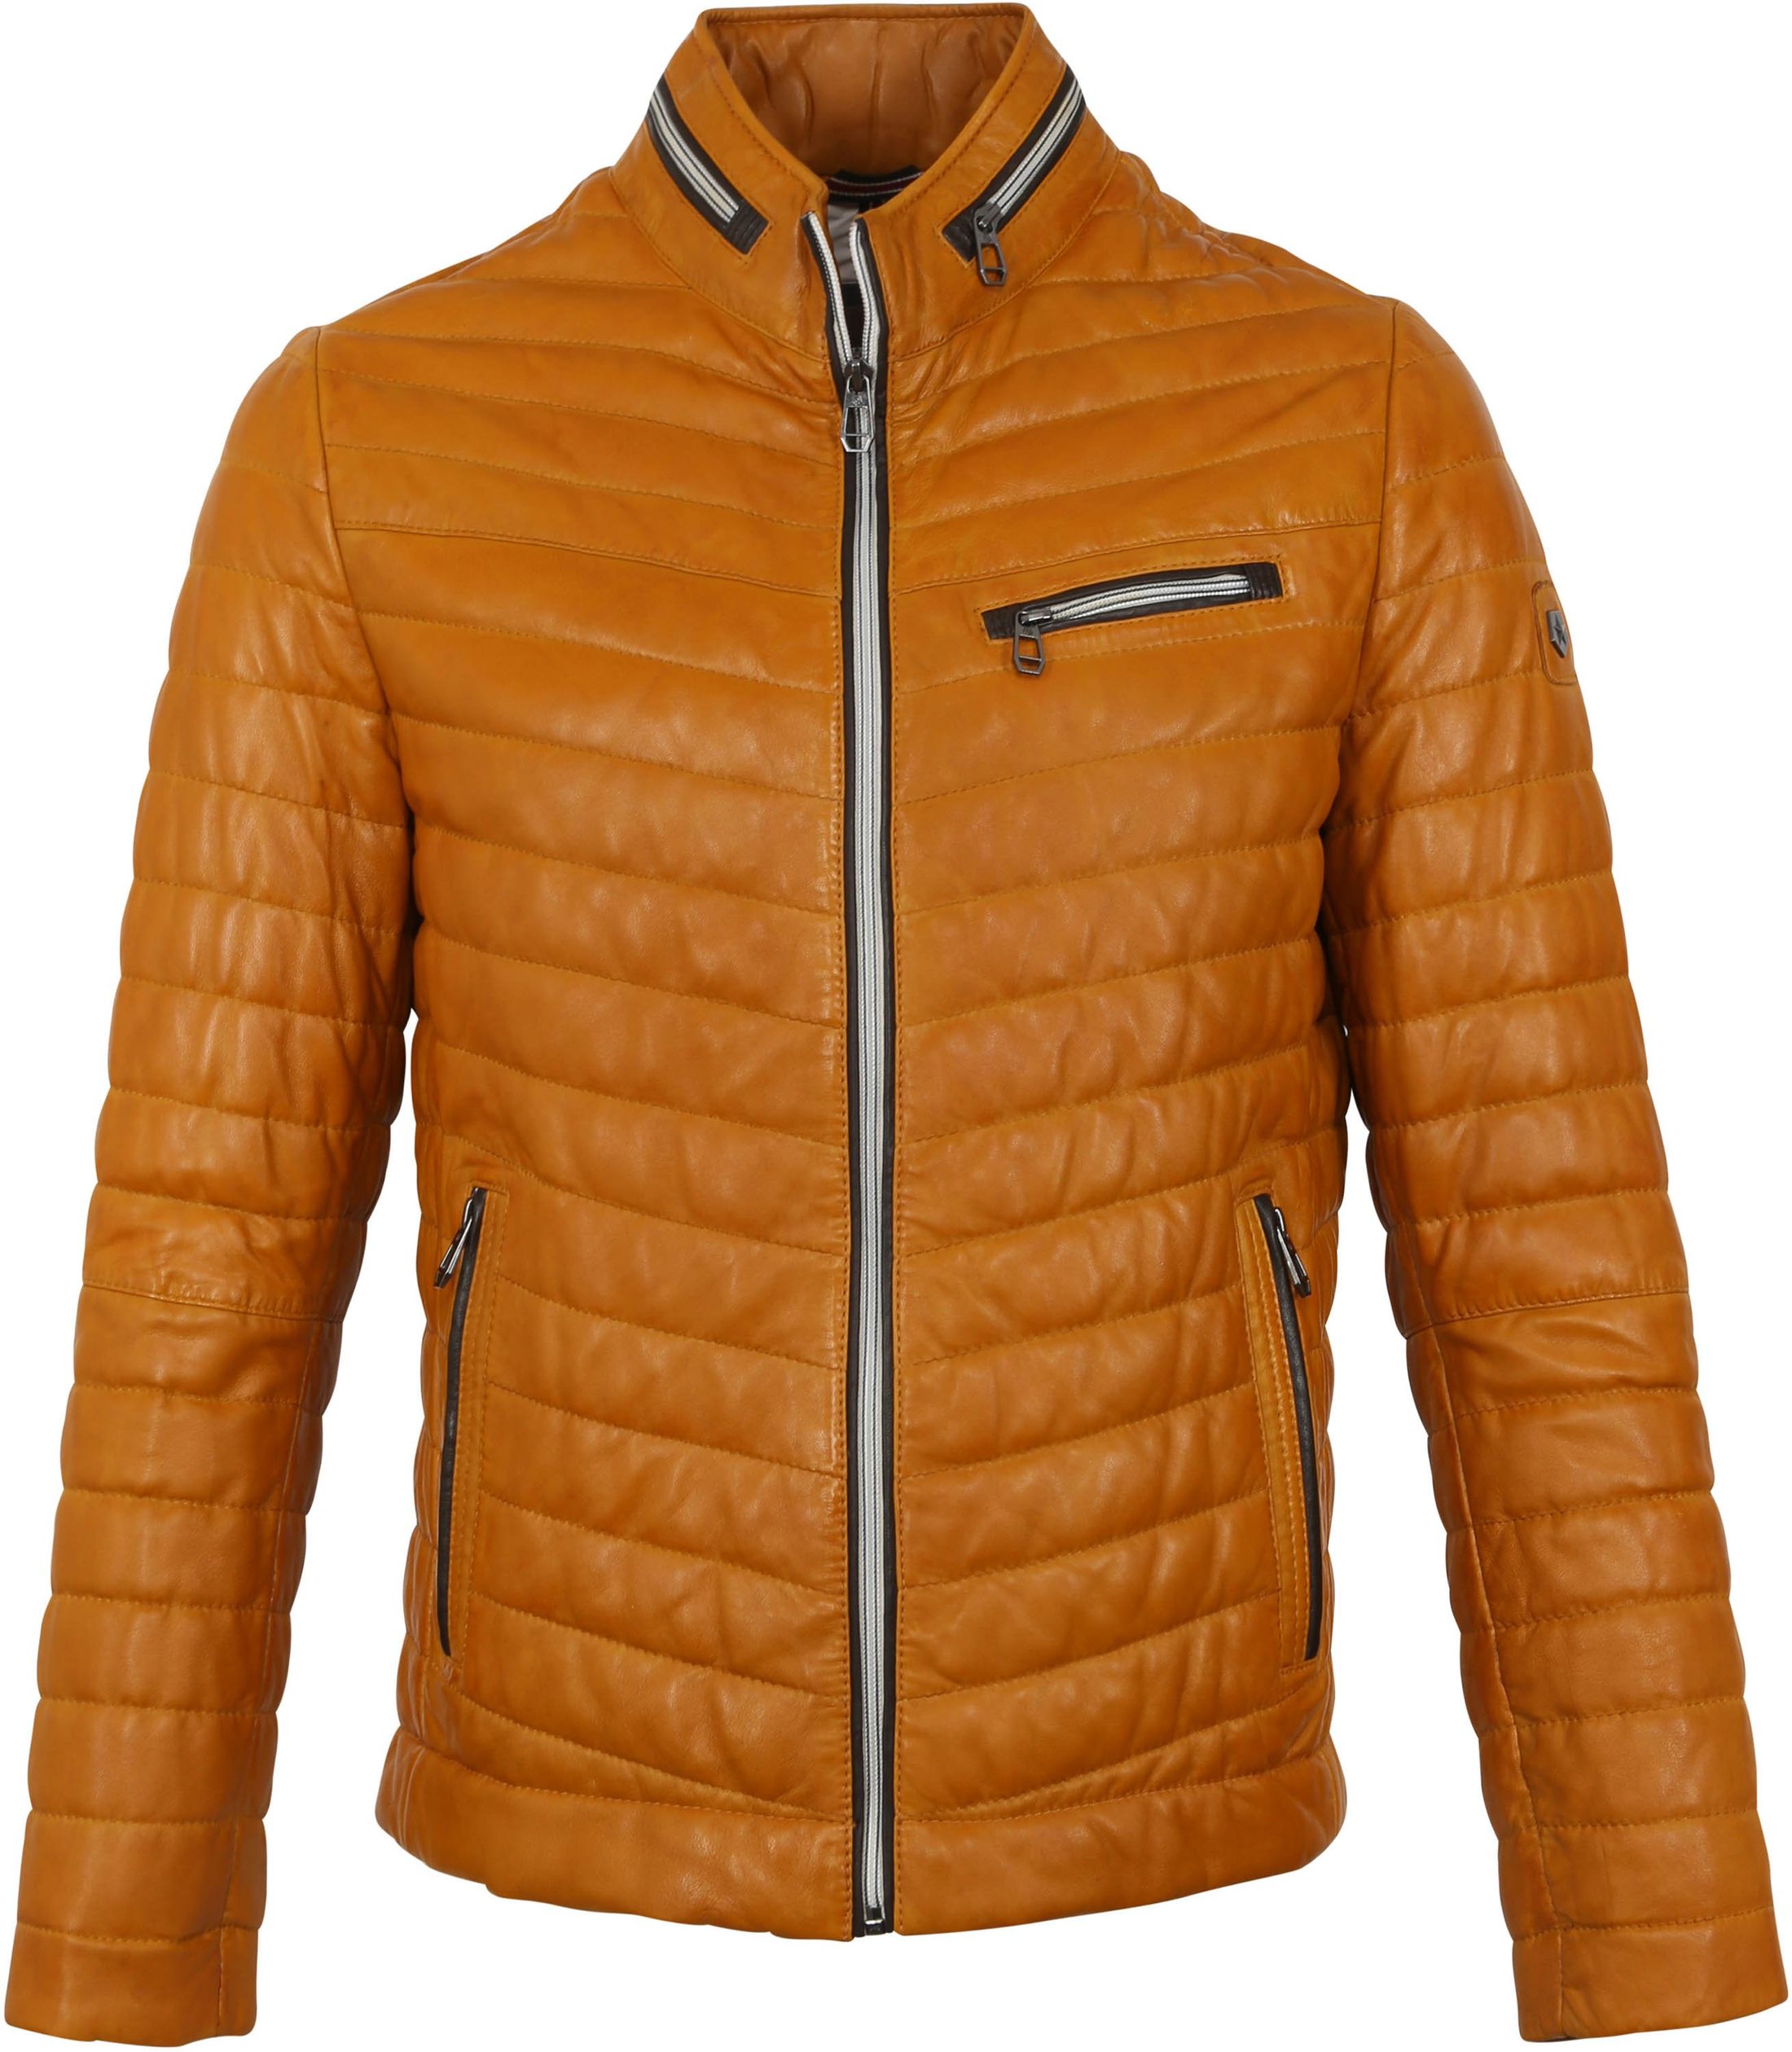 Milestone Damiano Leather Ocre Jacket Yellow size 38-R